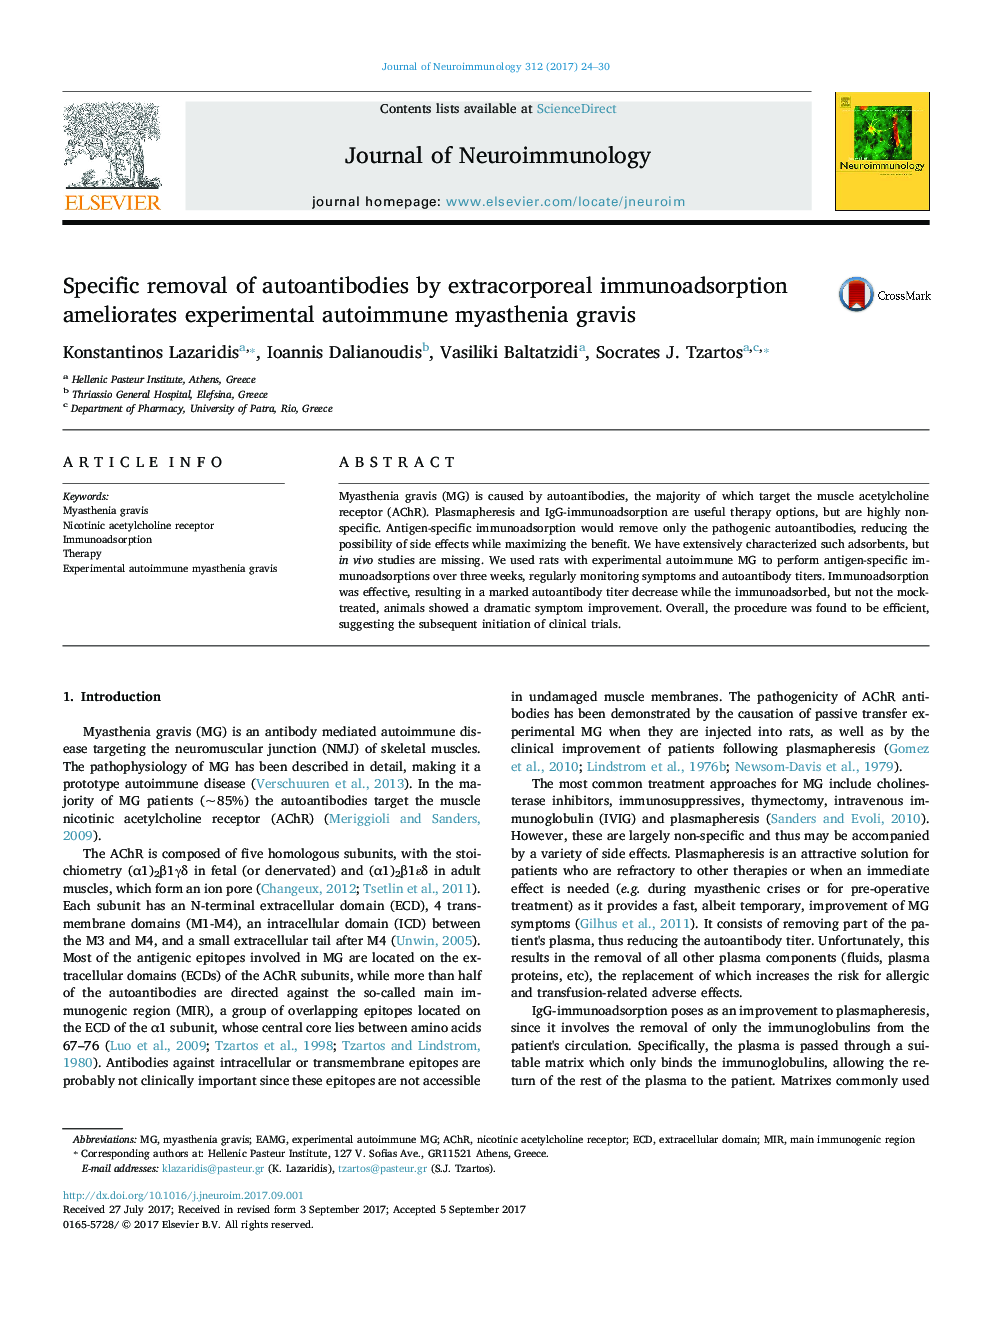 Specific removal of autoantibodies by extracorporeal immunoadsorption ameliorates experimental autoimmune myasthenia gravis